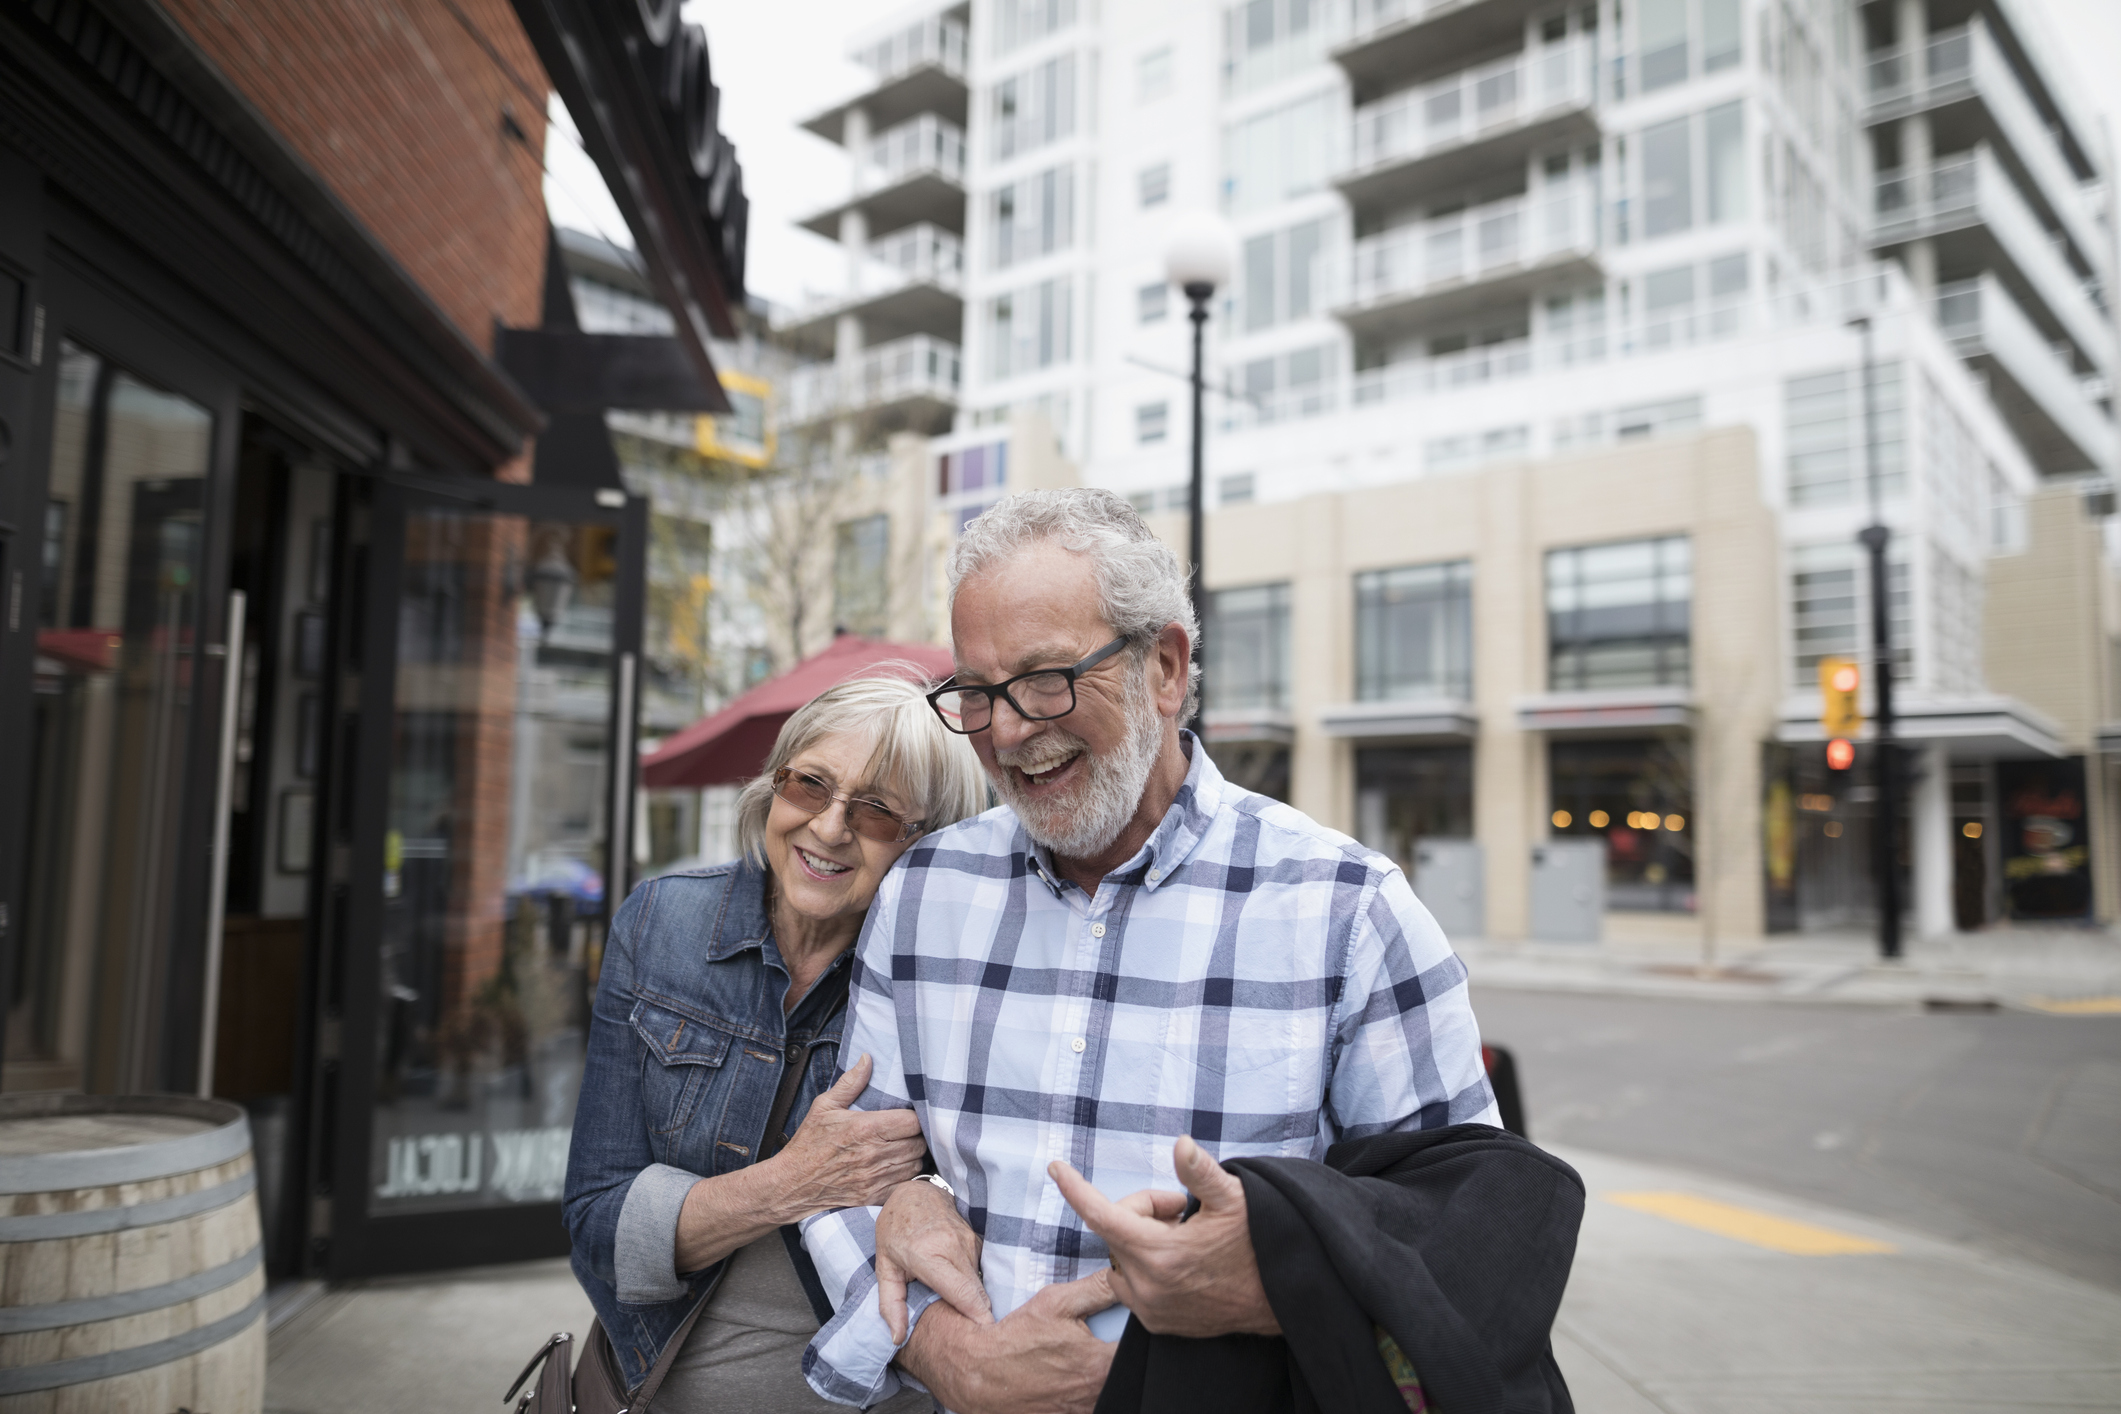 Smiling, affectionate senior couple walking on urban sidewalk